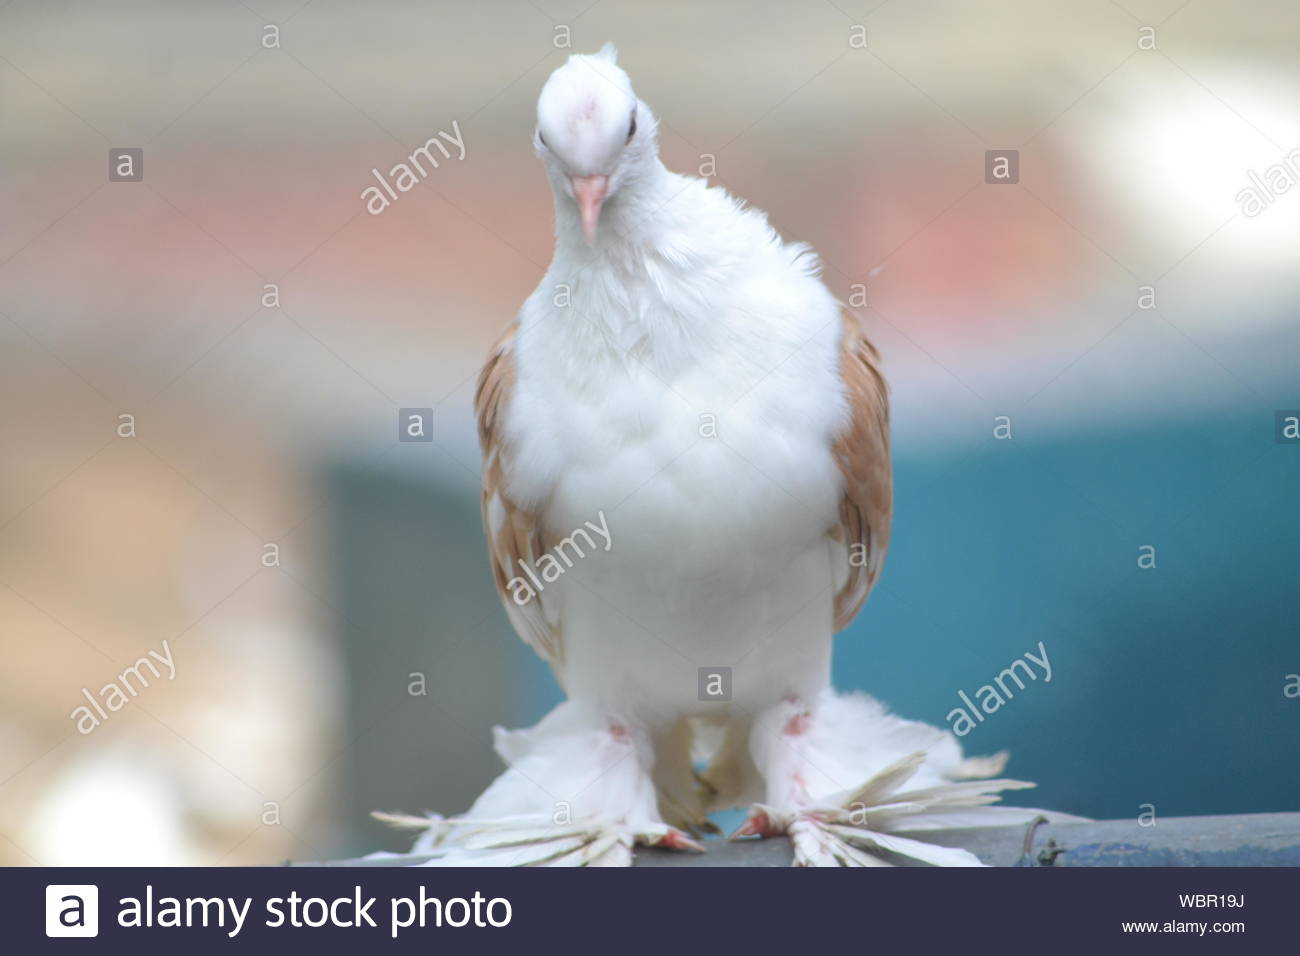 White Dove On Blue Background Stock Photo